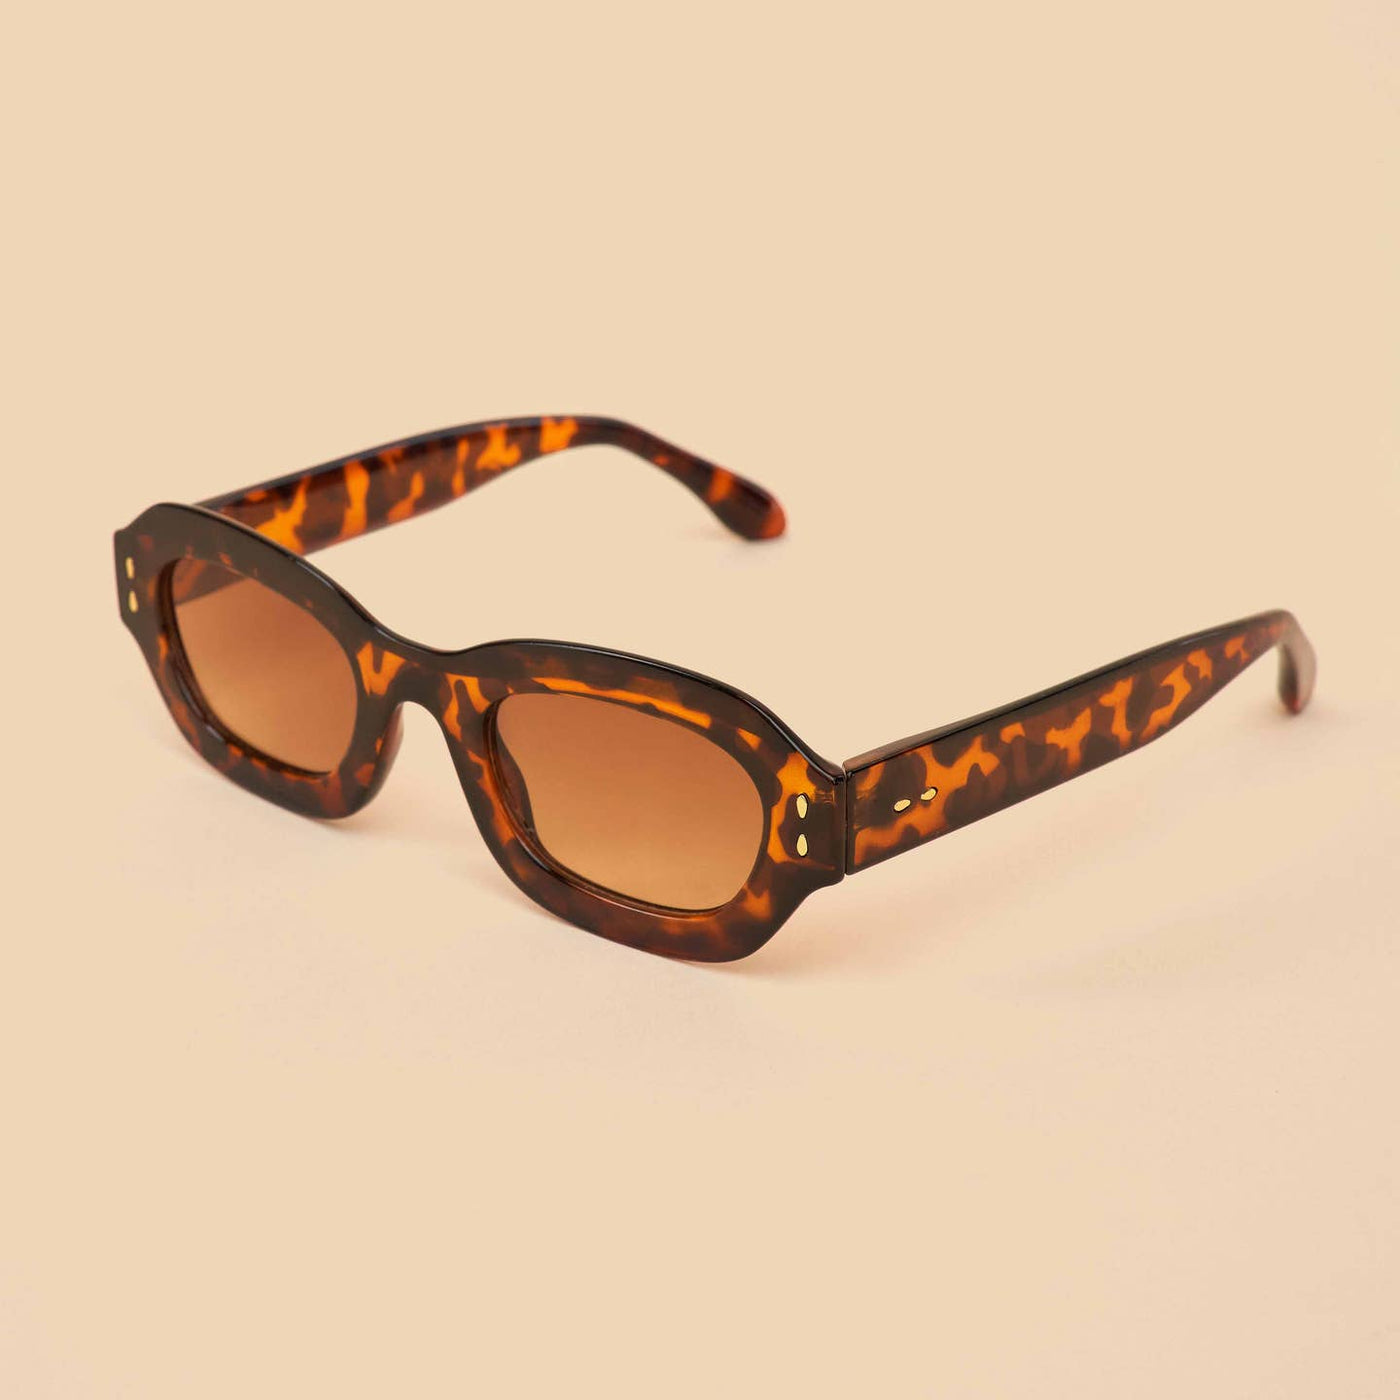 Honey Limited Edition Sunglasses - Tortoise